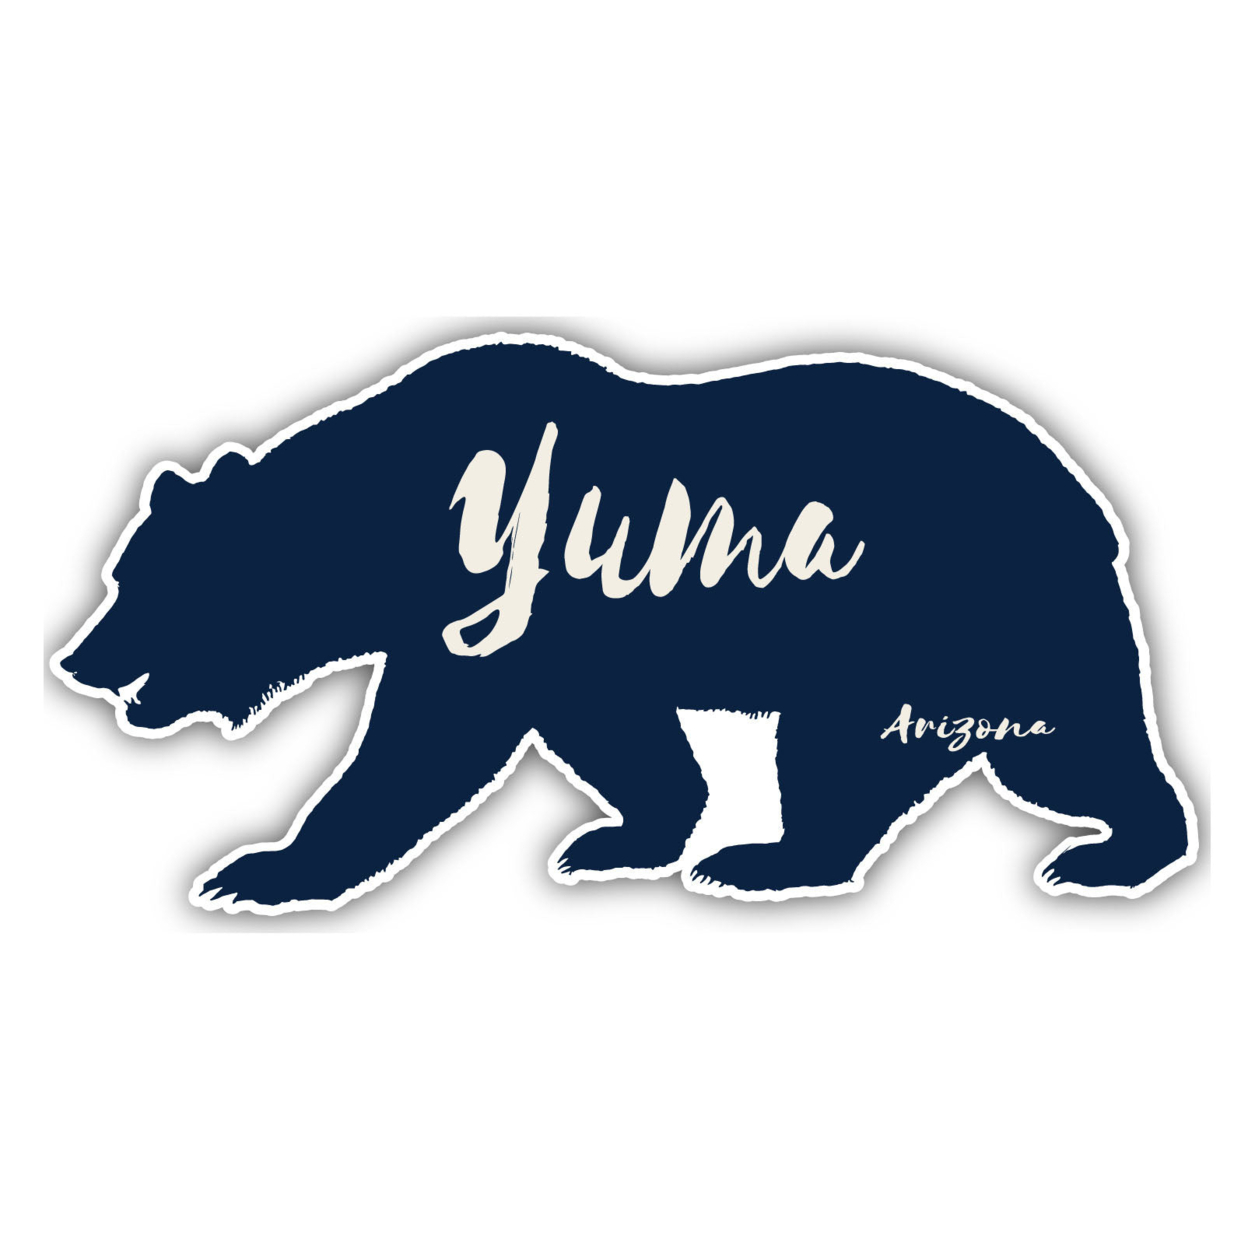 Yuma Arizona Souvenir Decorative Stickers (Choose Theme And Size) - Single Unit, 4-Inch, Bear